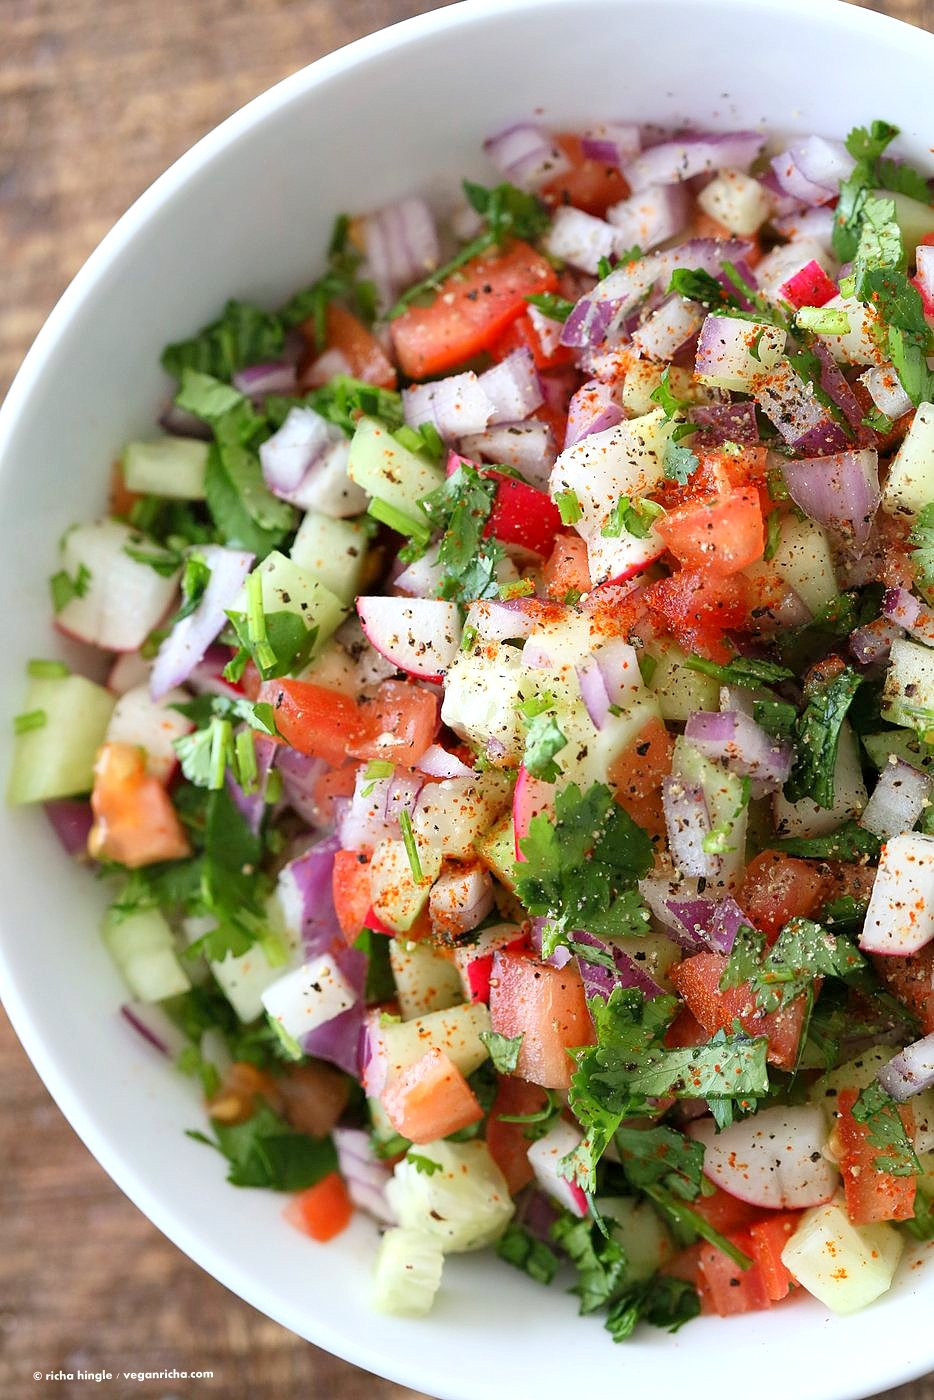 Indian Salad Recipes
 Kachumber Salad Cucumber Tomato ion Salad Recipe